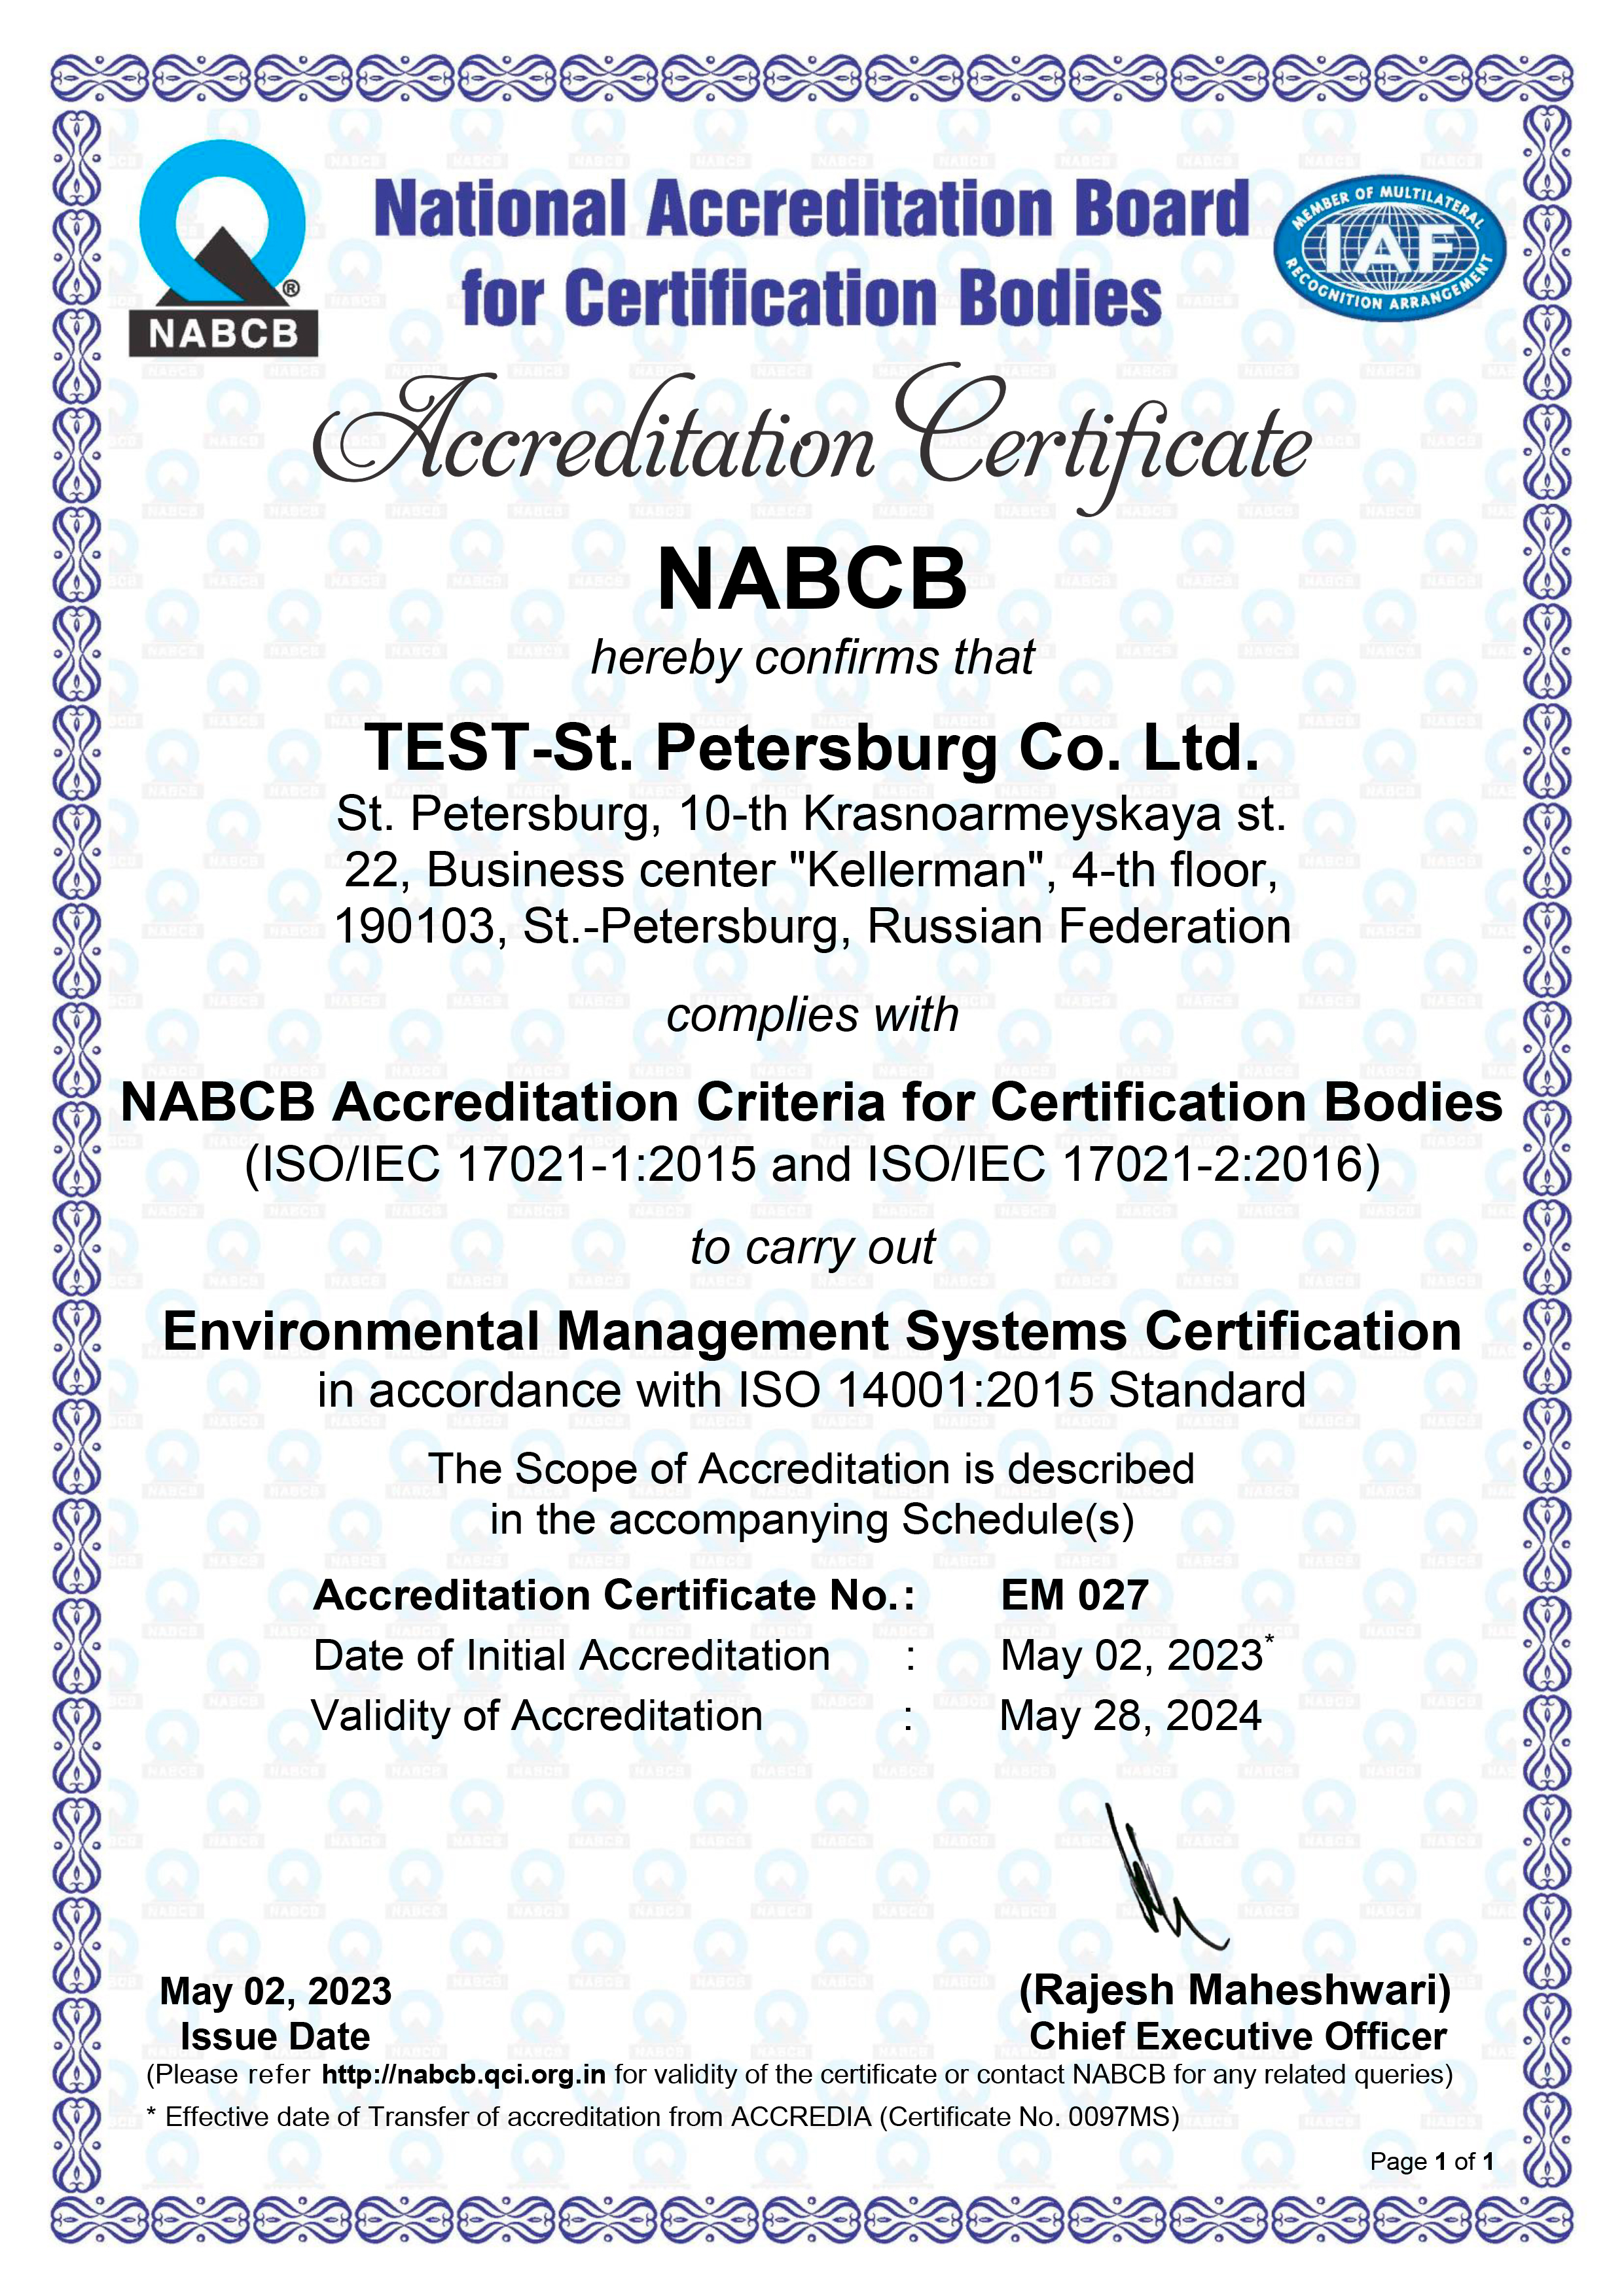 Критерии аккредитации NABCB для органов по сертификации(ISO/IEC 17021-1:2015 и ISO/IEC 17021-2:2016)